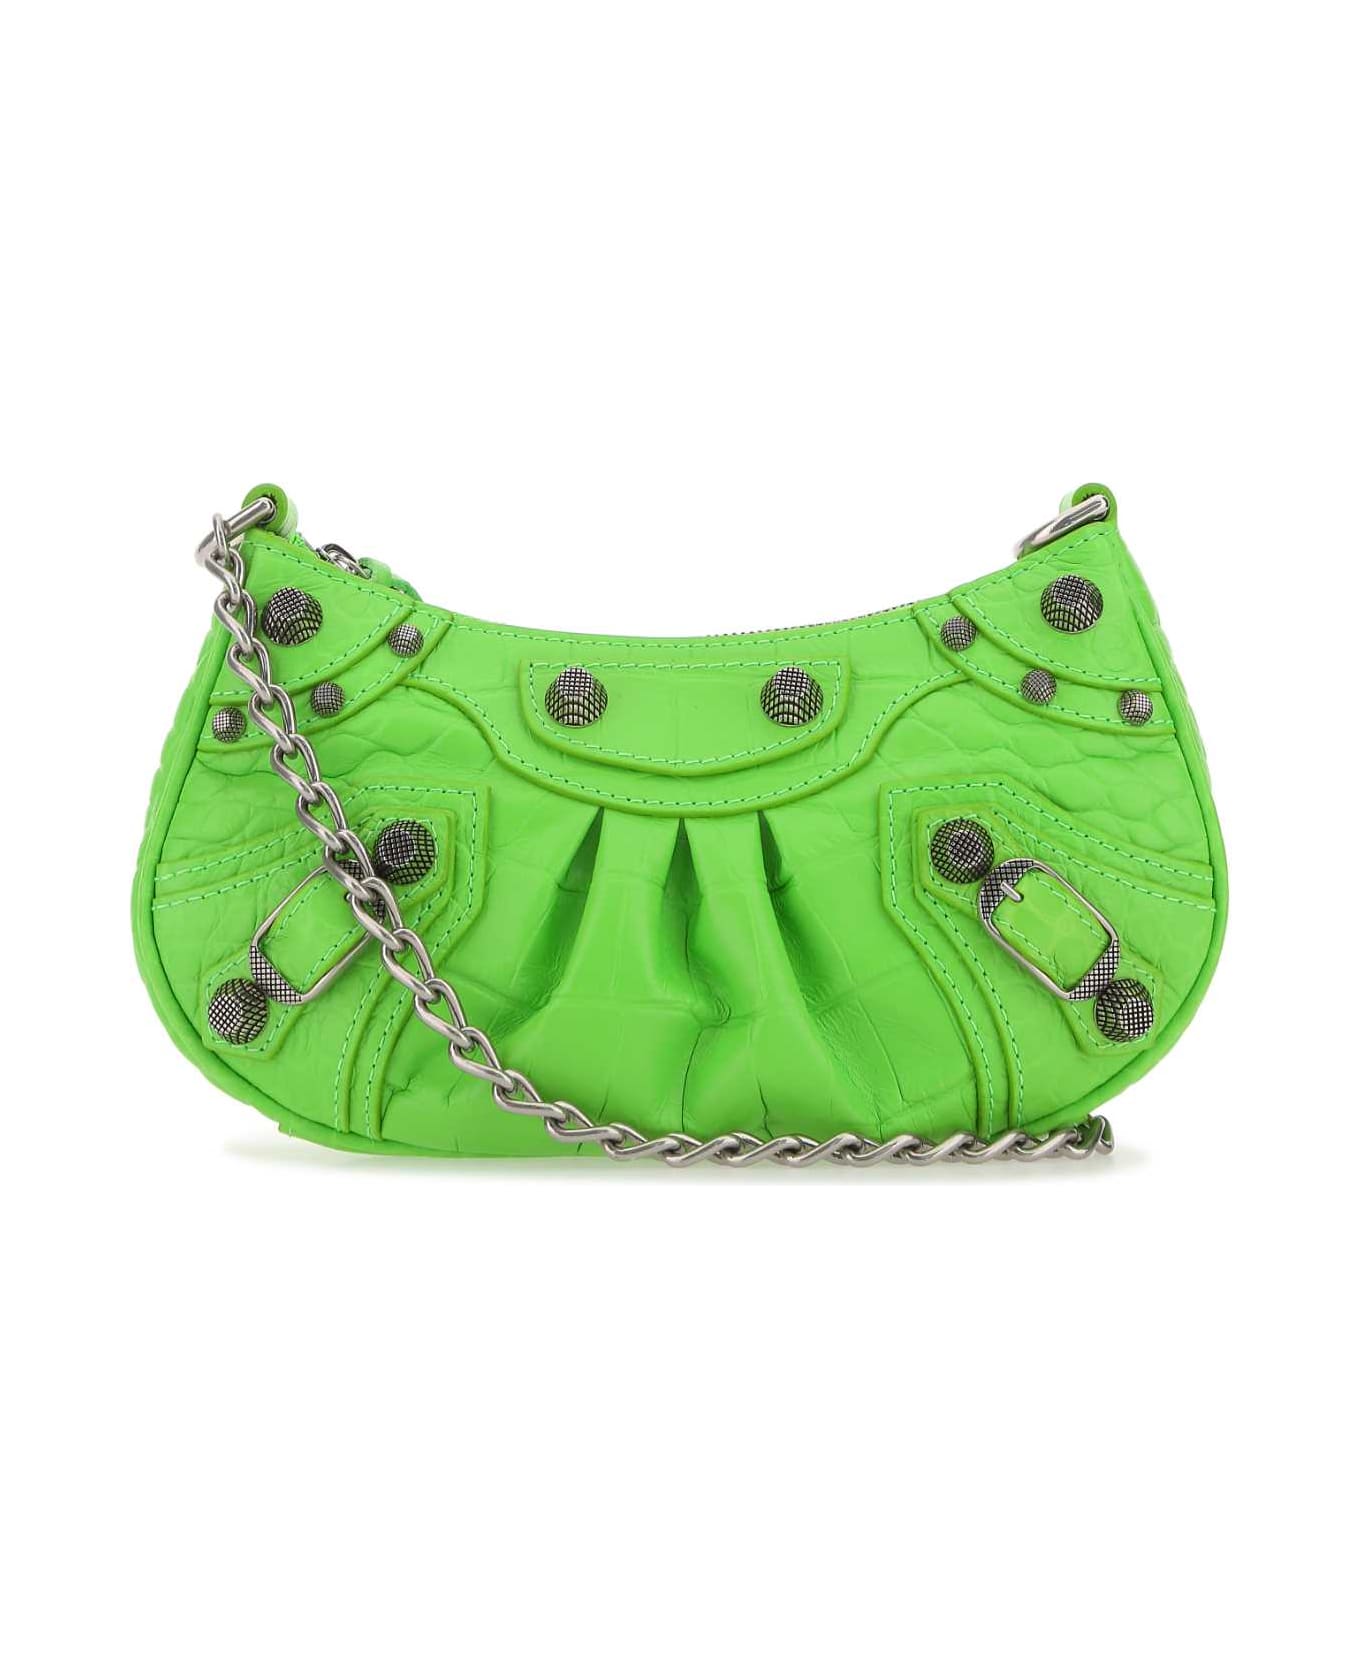 Balenciaga Fluo Green Leather Le Cagole Mini Handbag - 3817